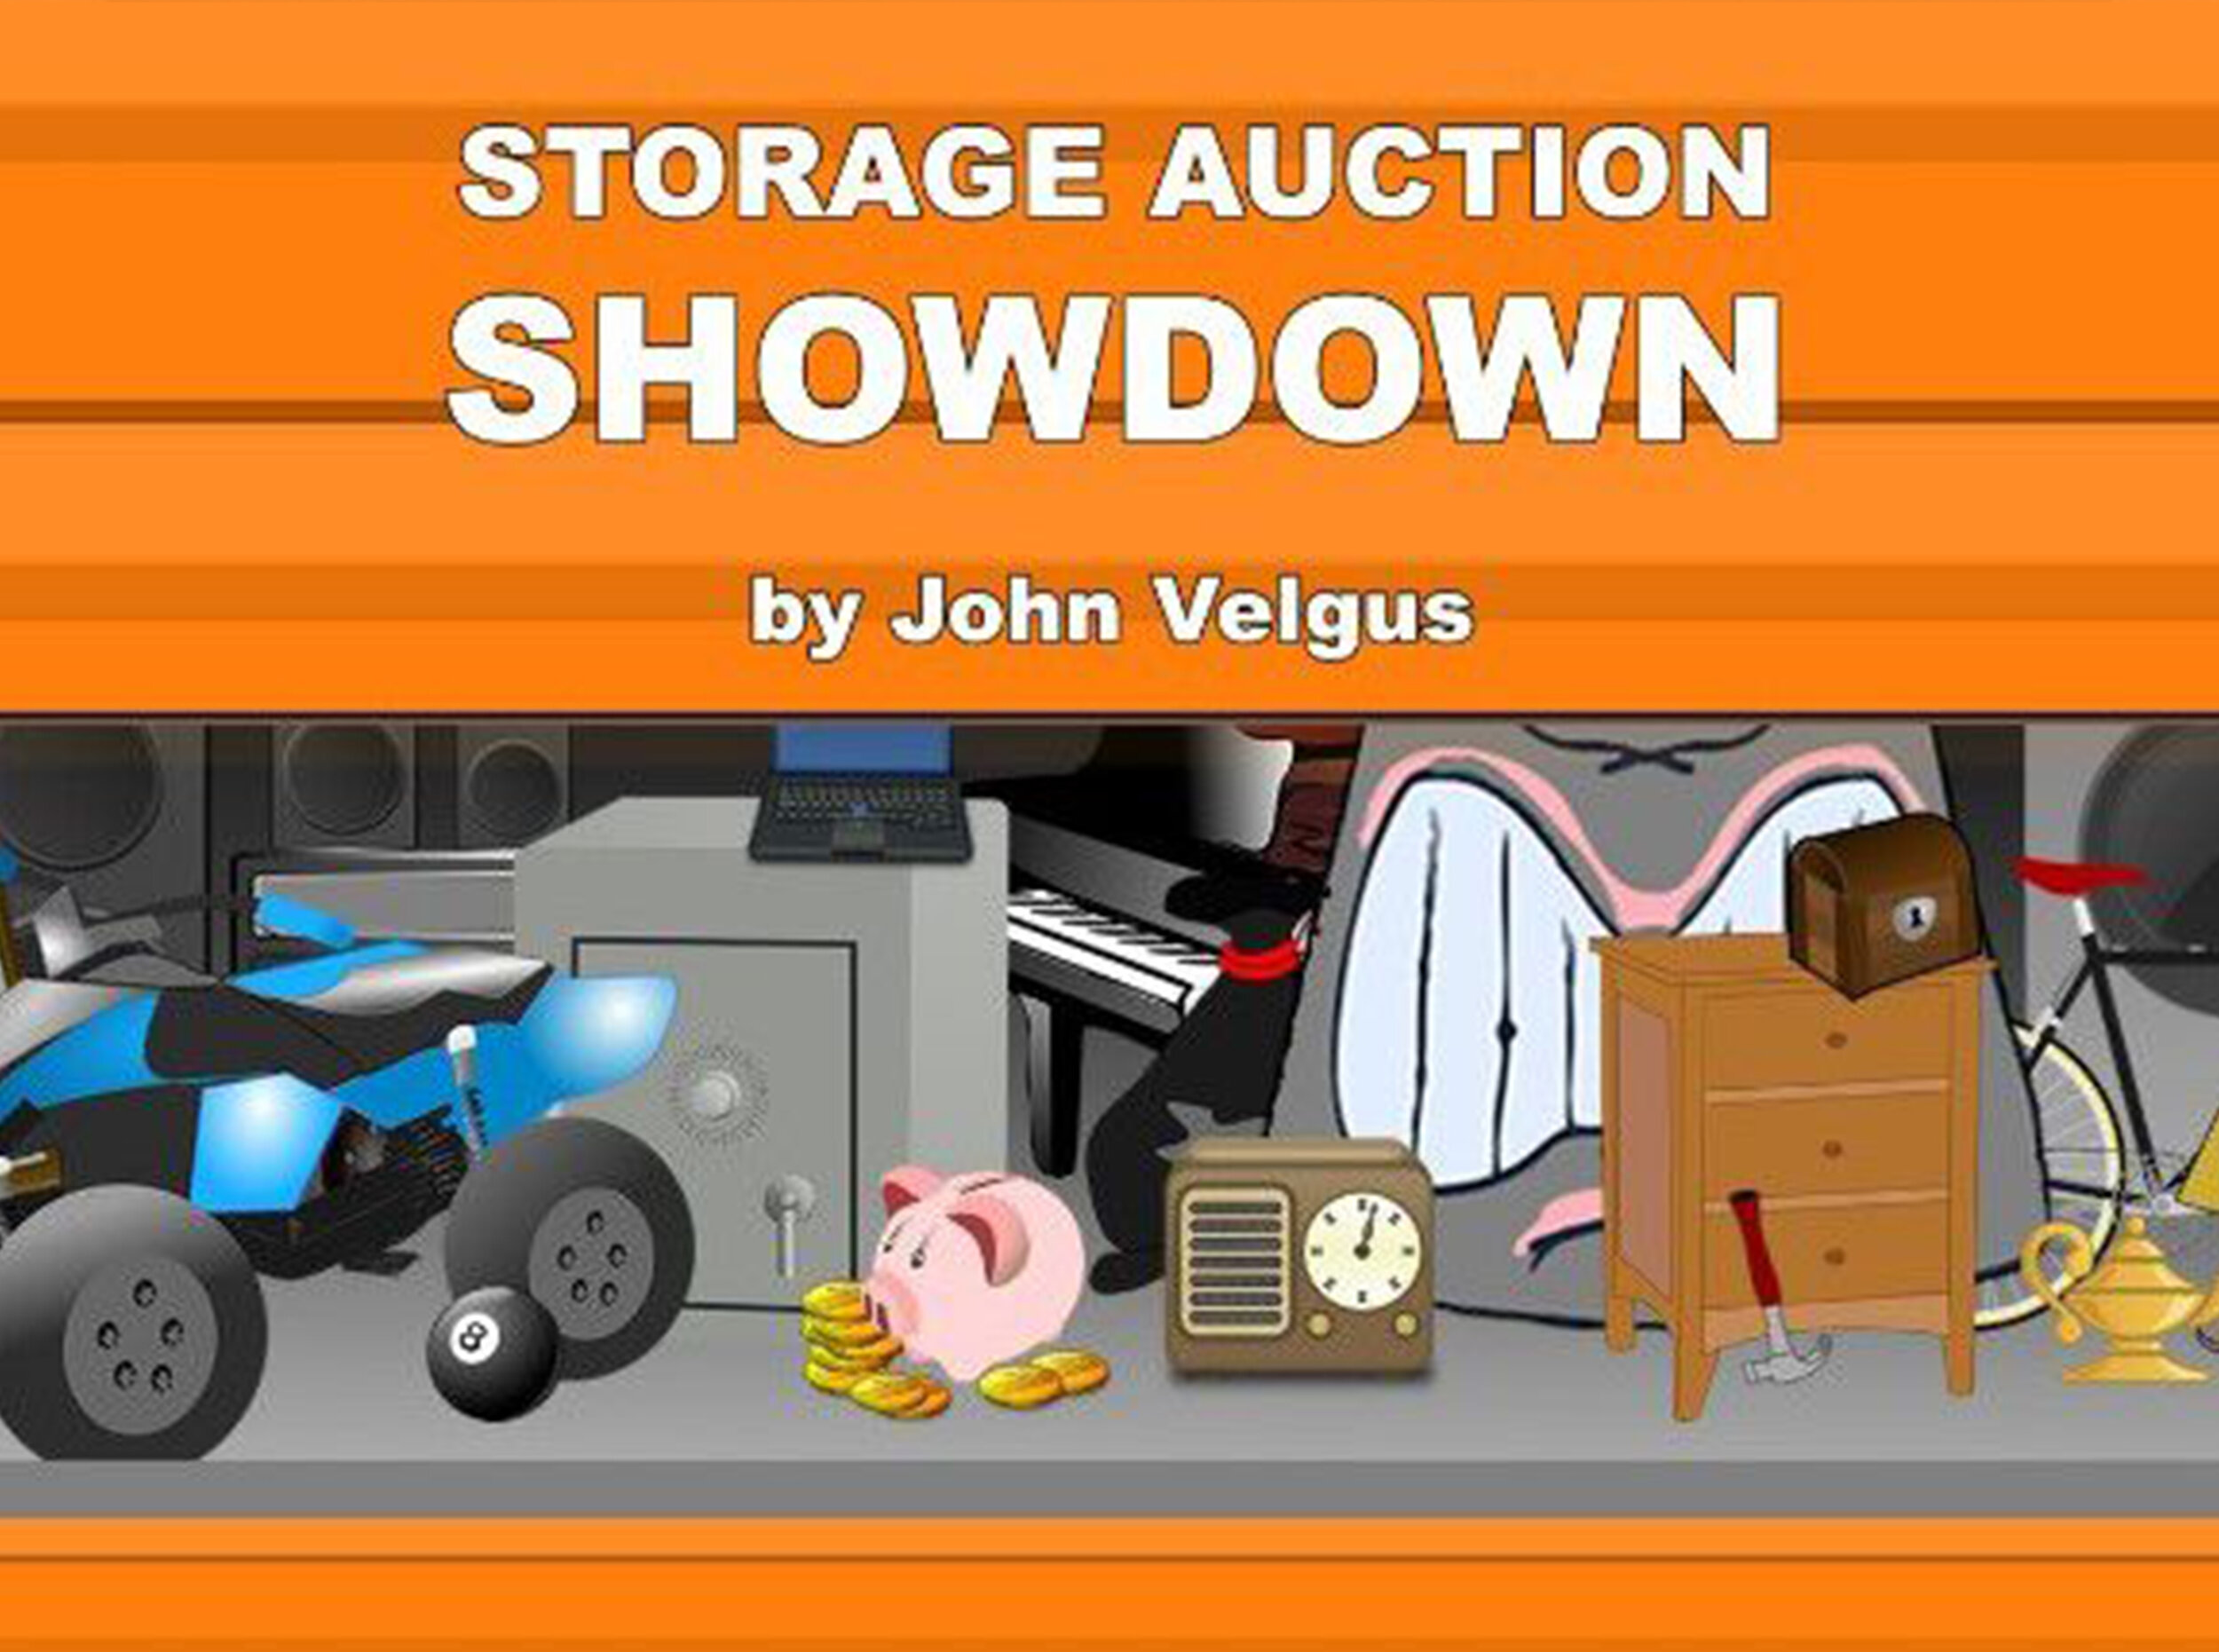 Storage Auction Showdown Cover.jpg